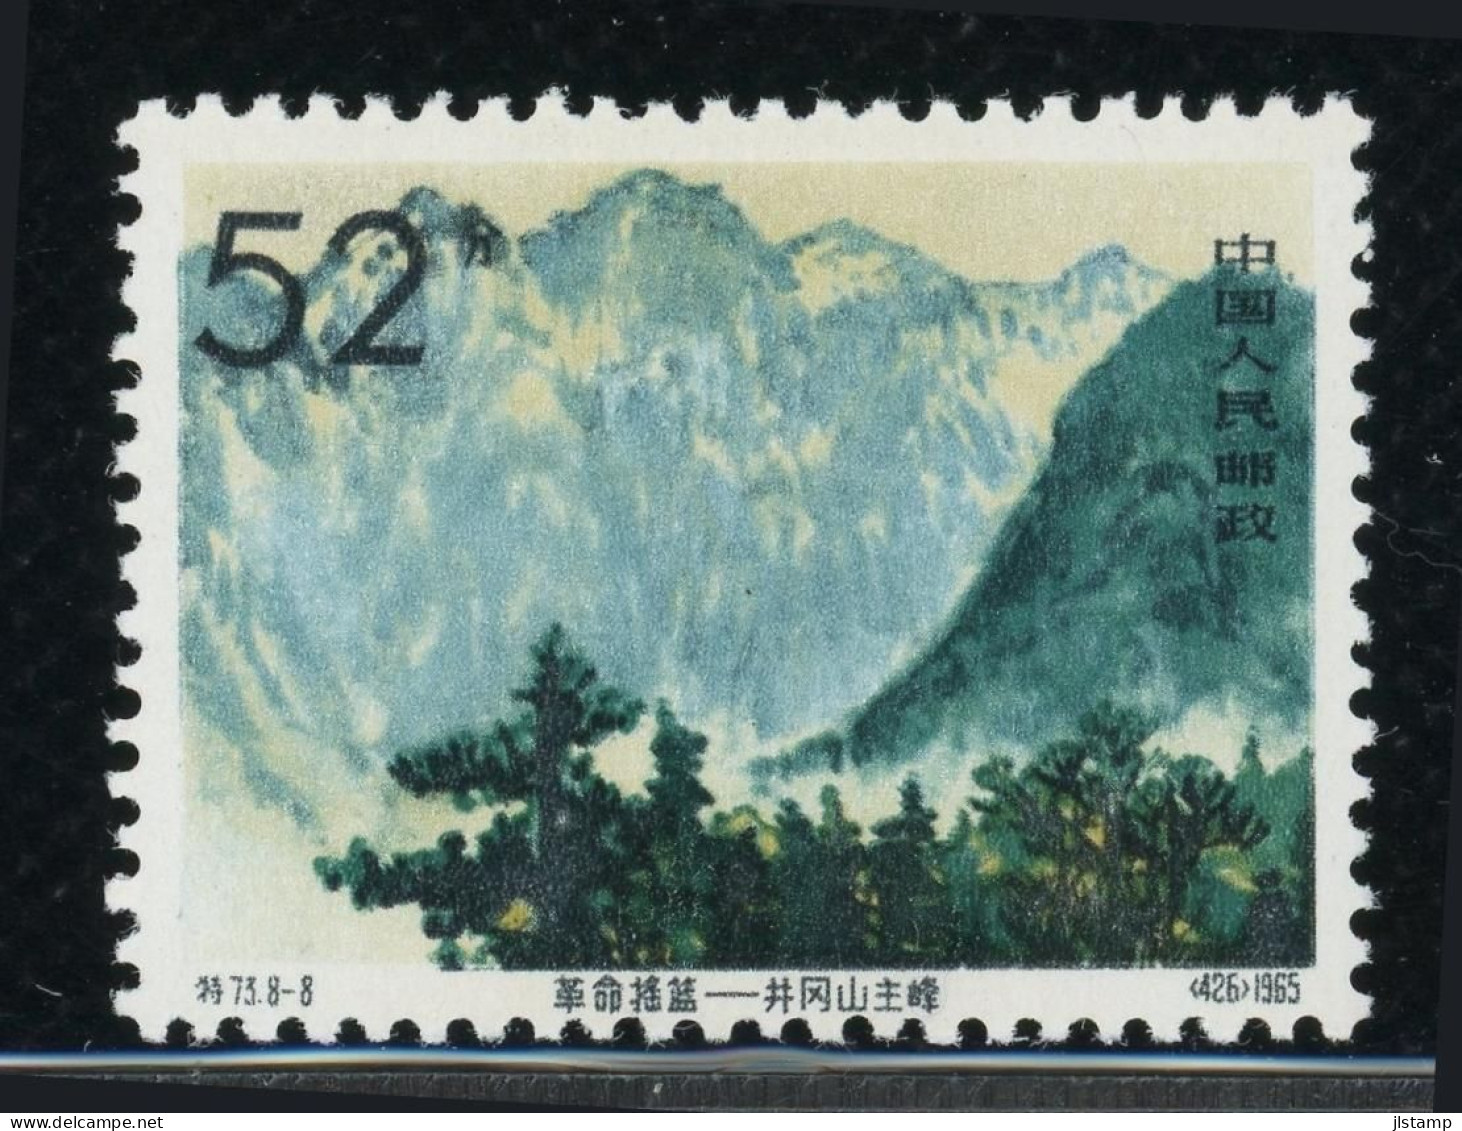 China 1965 Chingkang Mountains,High Value 52f,Scott# 841,MNH,OG,VF - Unused Stamps